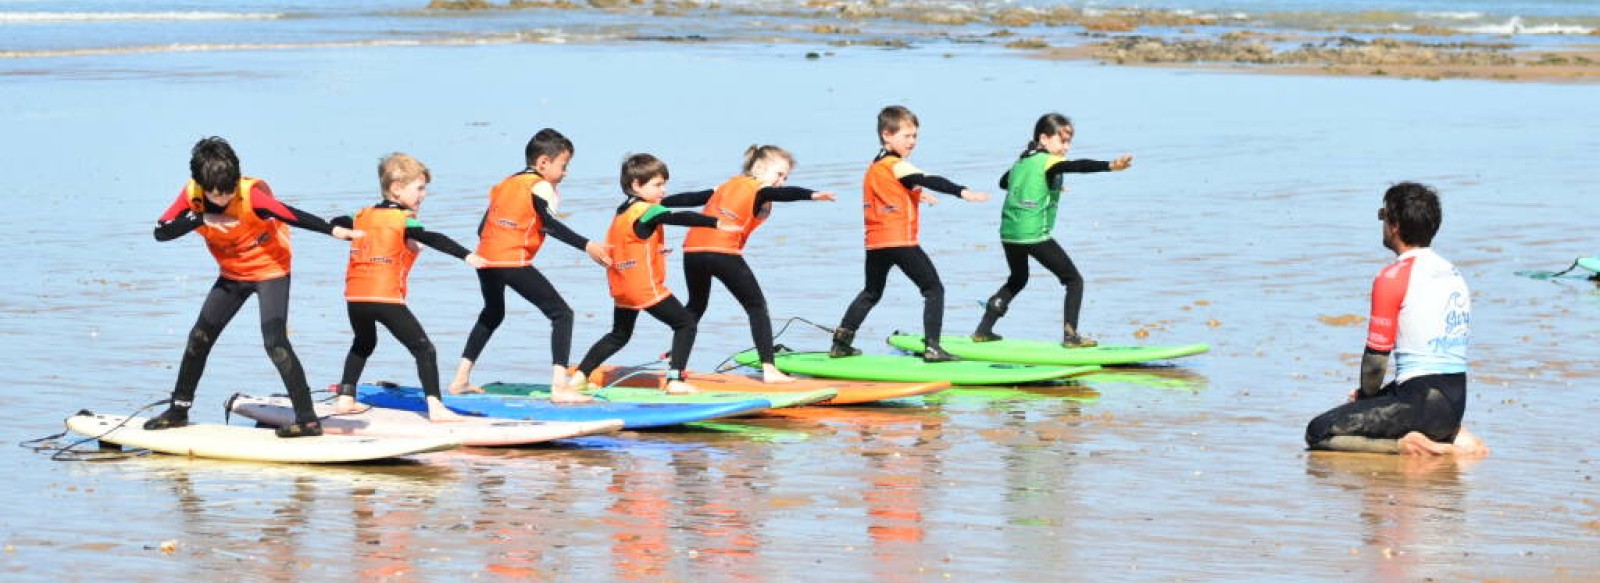 TARIF REDUIT EN FAMILLE - ATLANTIC LEZARD SURF SCHOOL